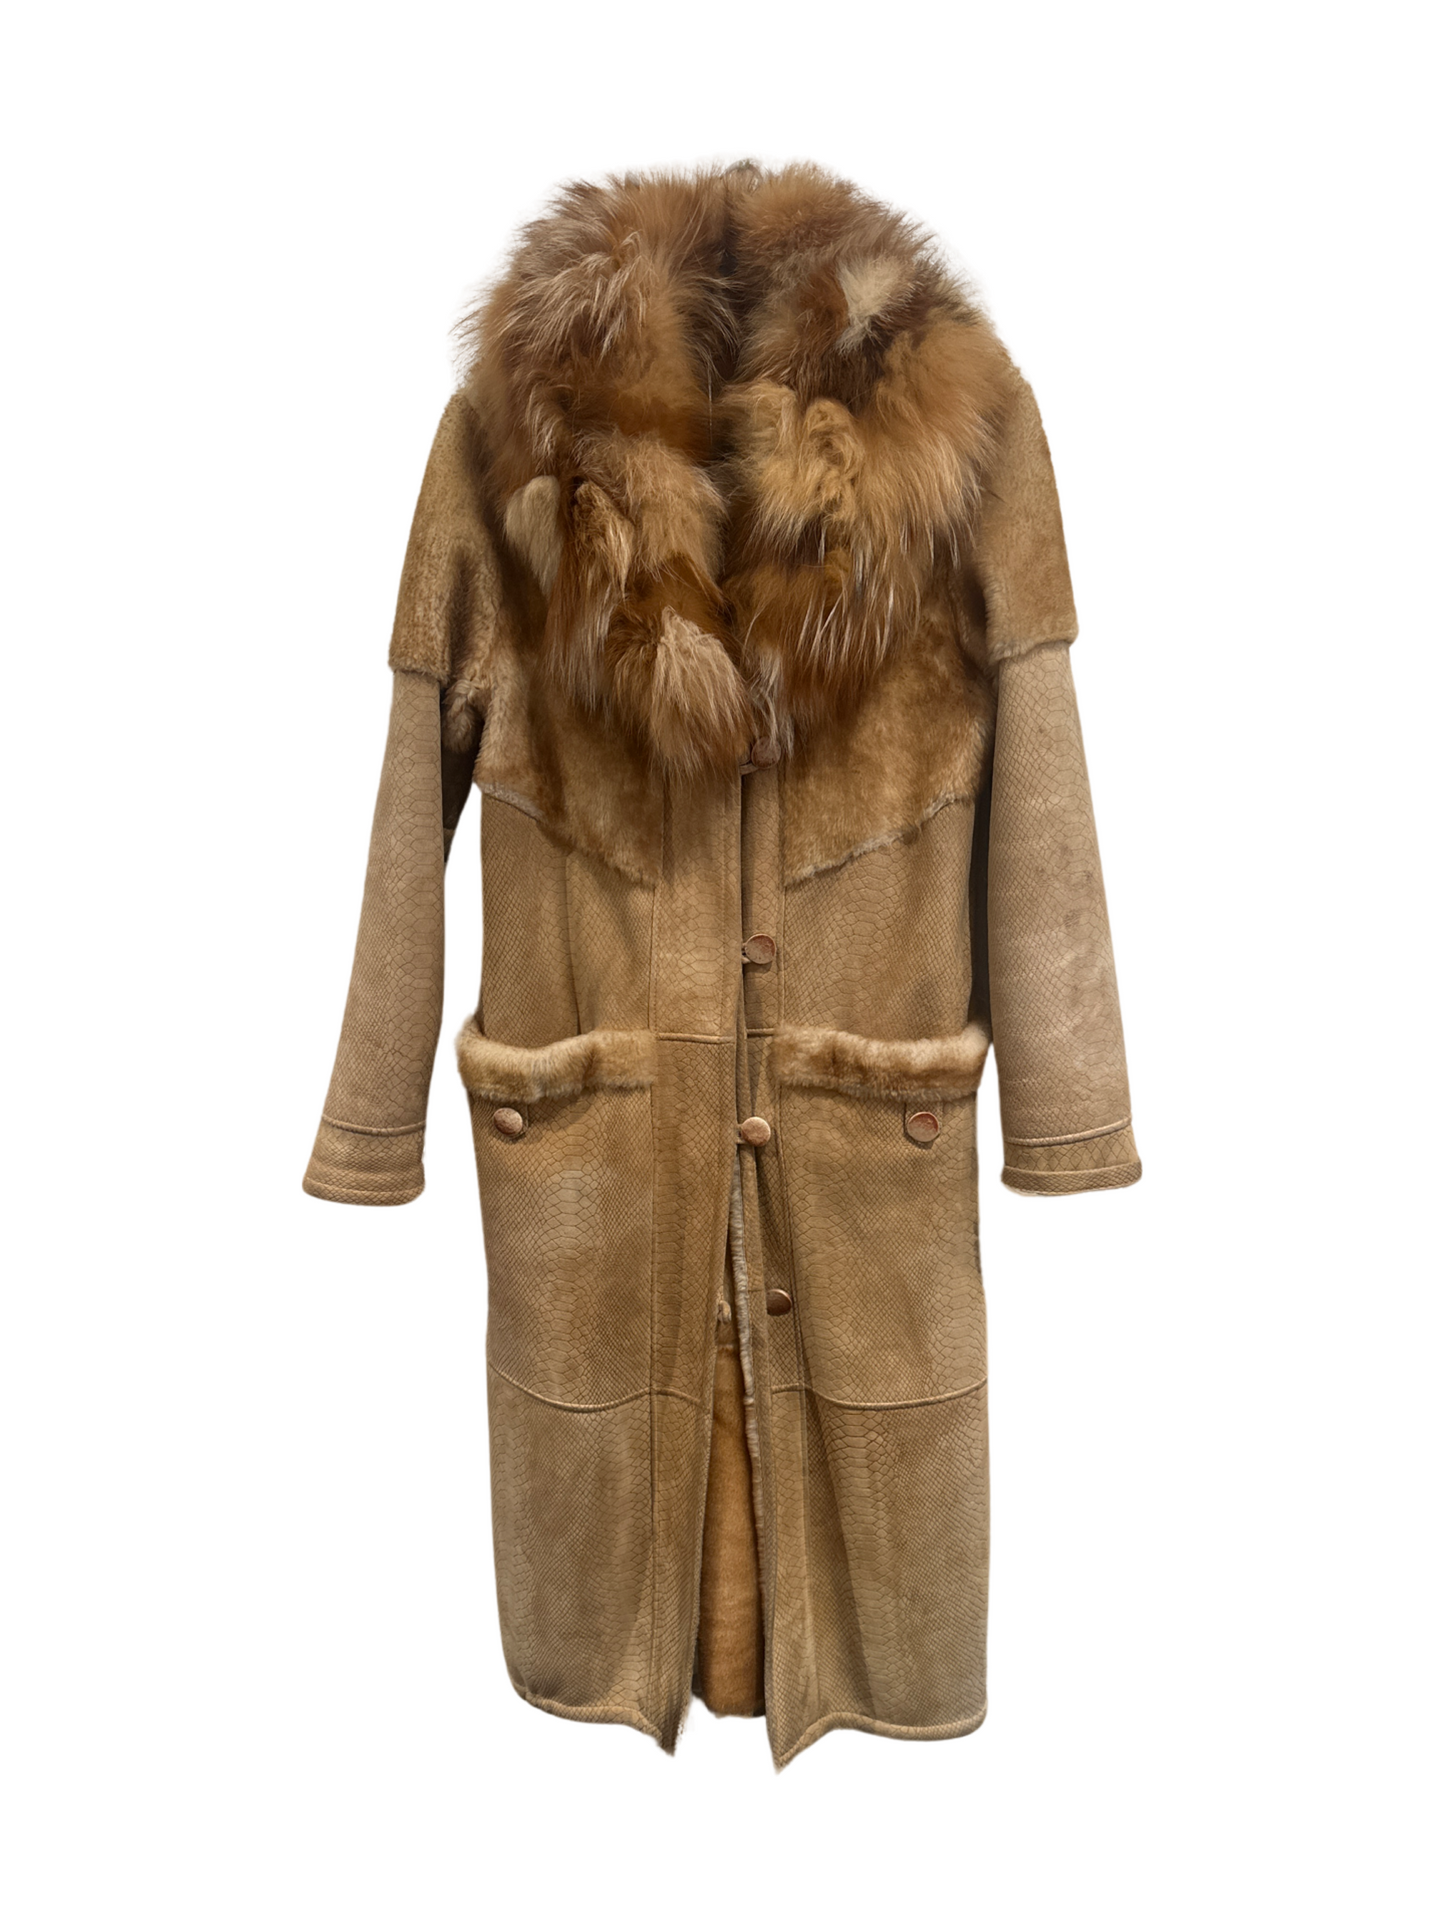 Armando Diaz Tan Real Fur Full Length Coat